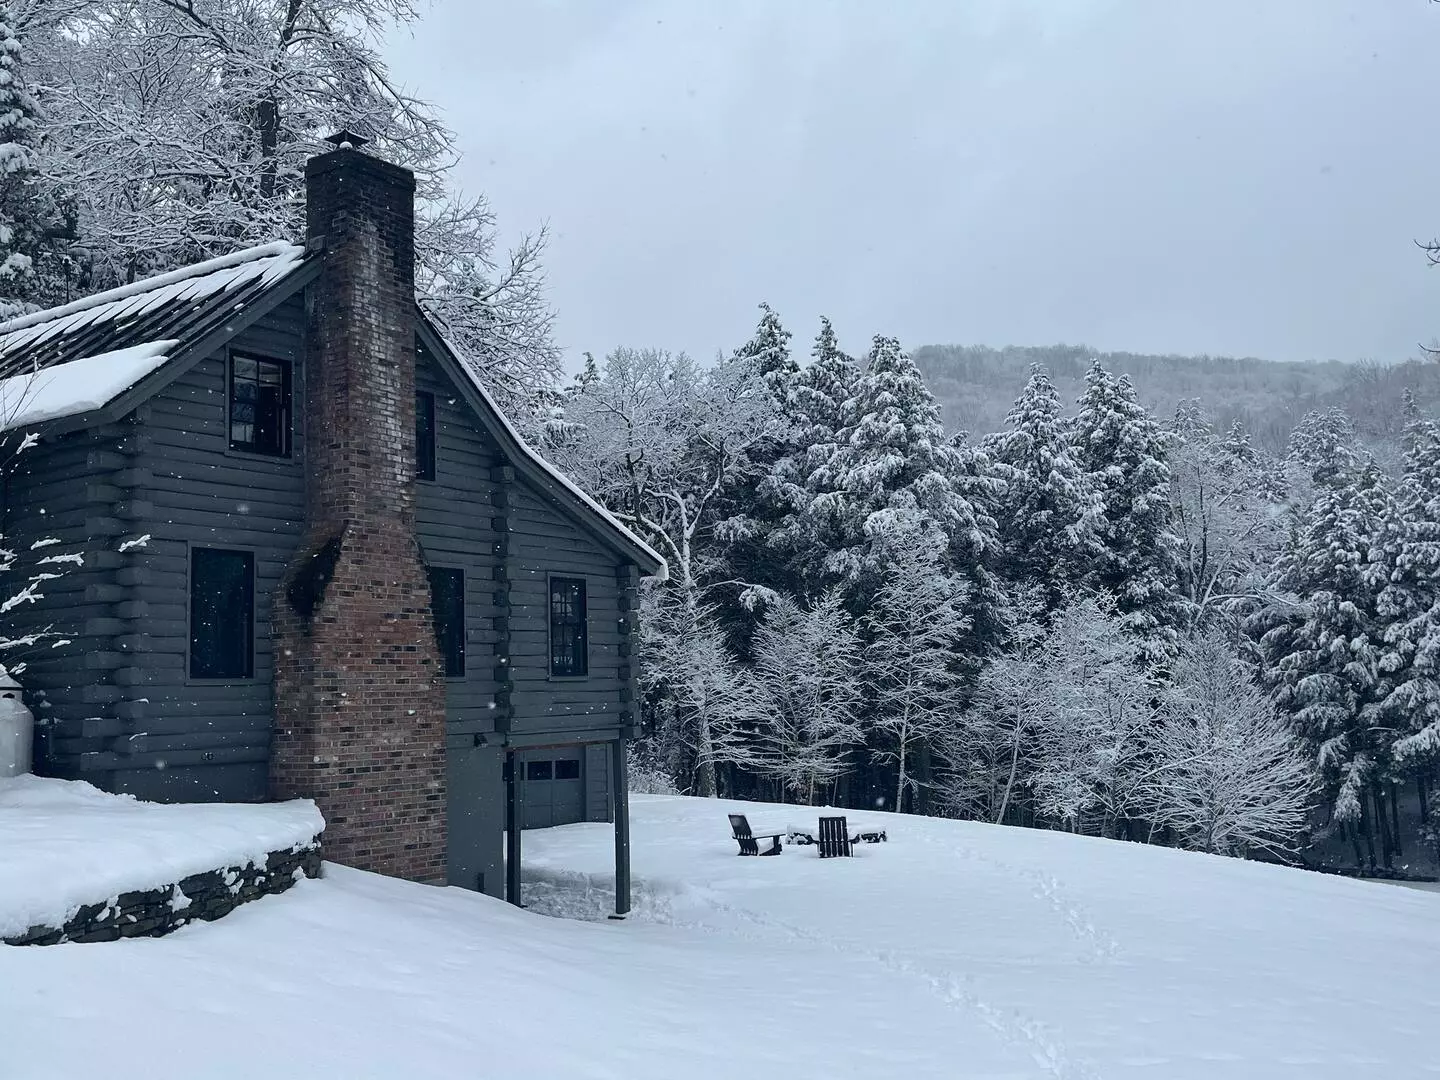 Greydon Cabin in Winter snow